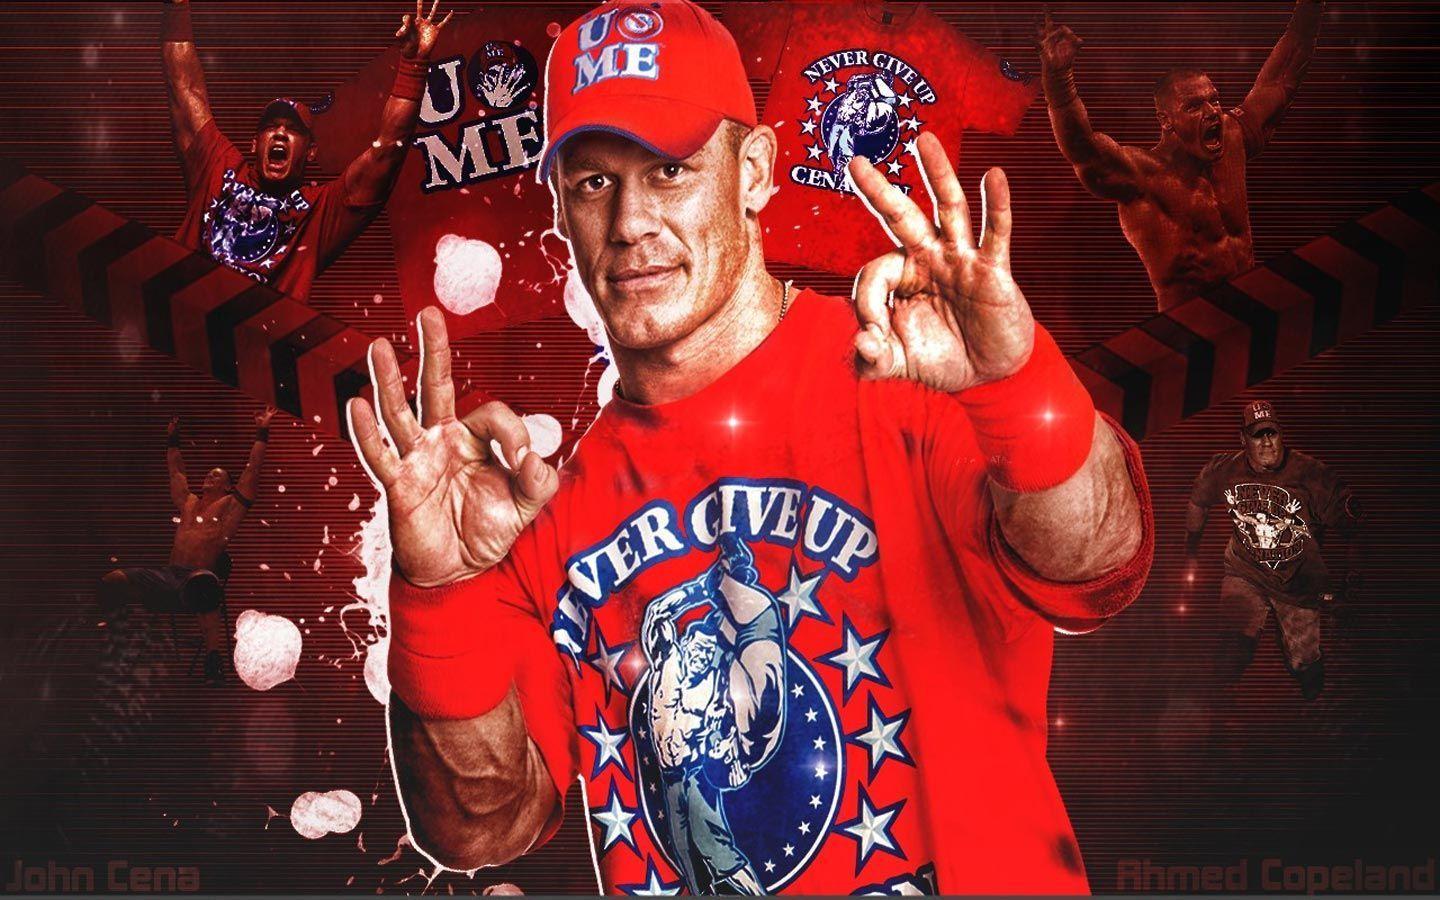 John Cena Background Wallpaper. TanukinoSippo